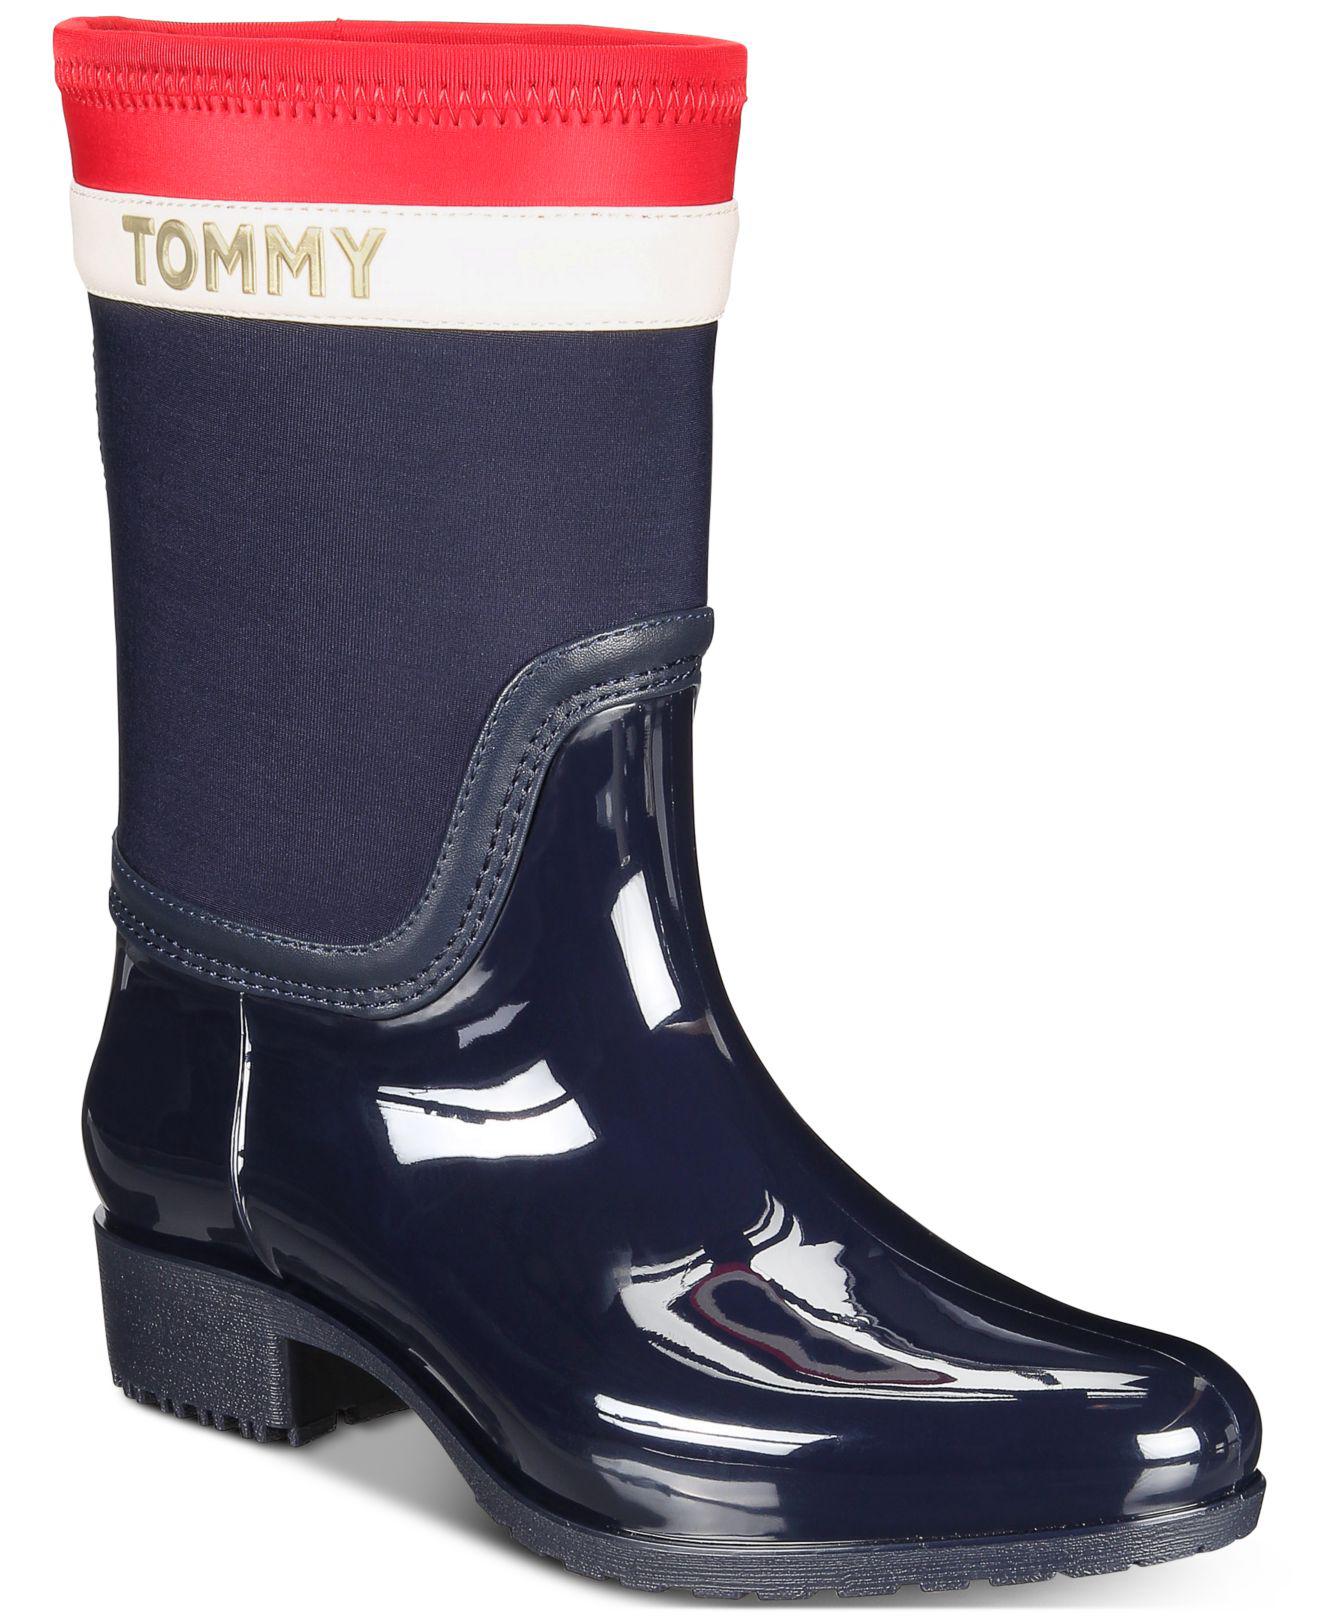 tommy boots macys